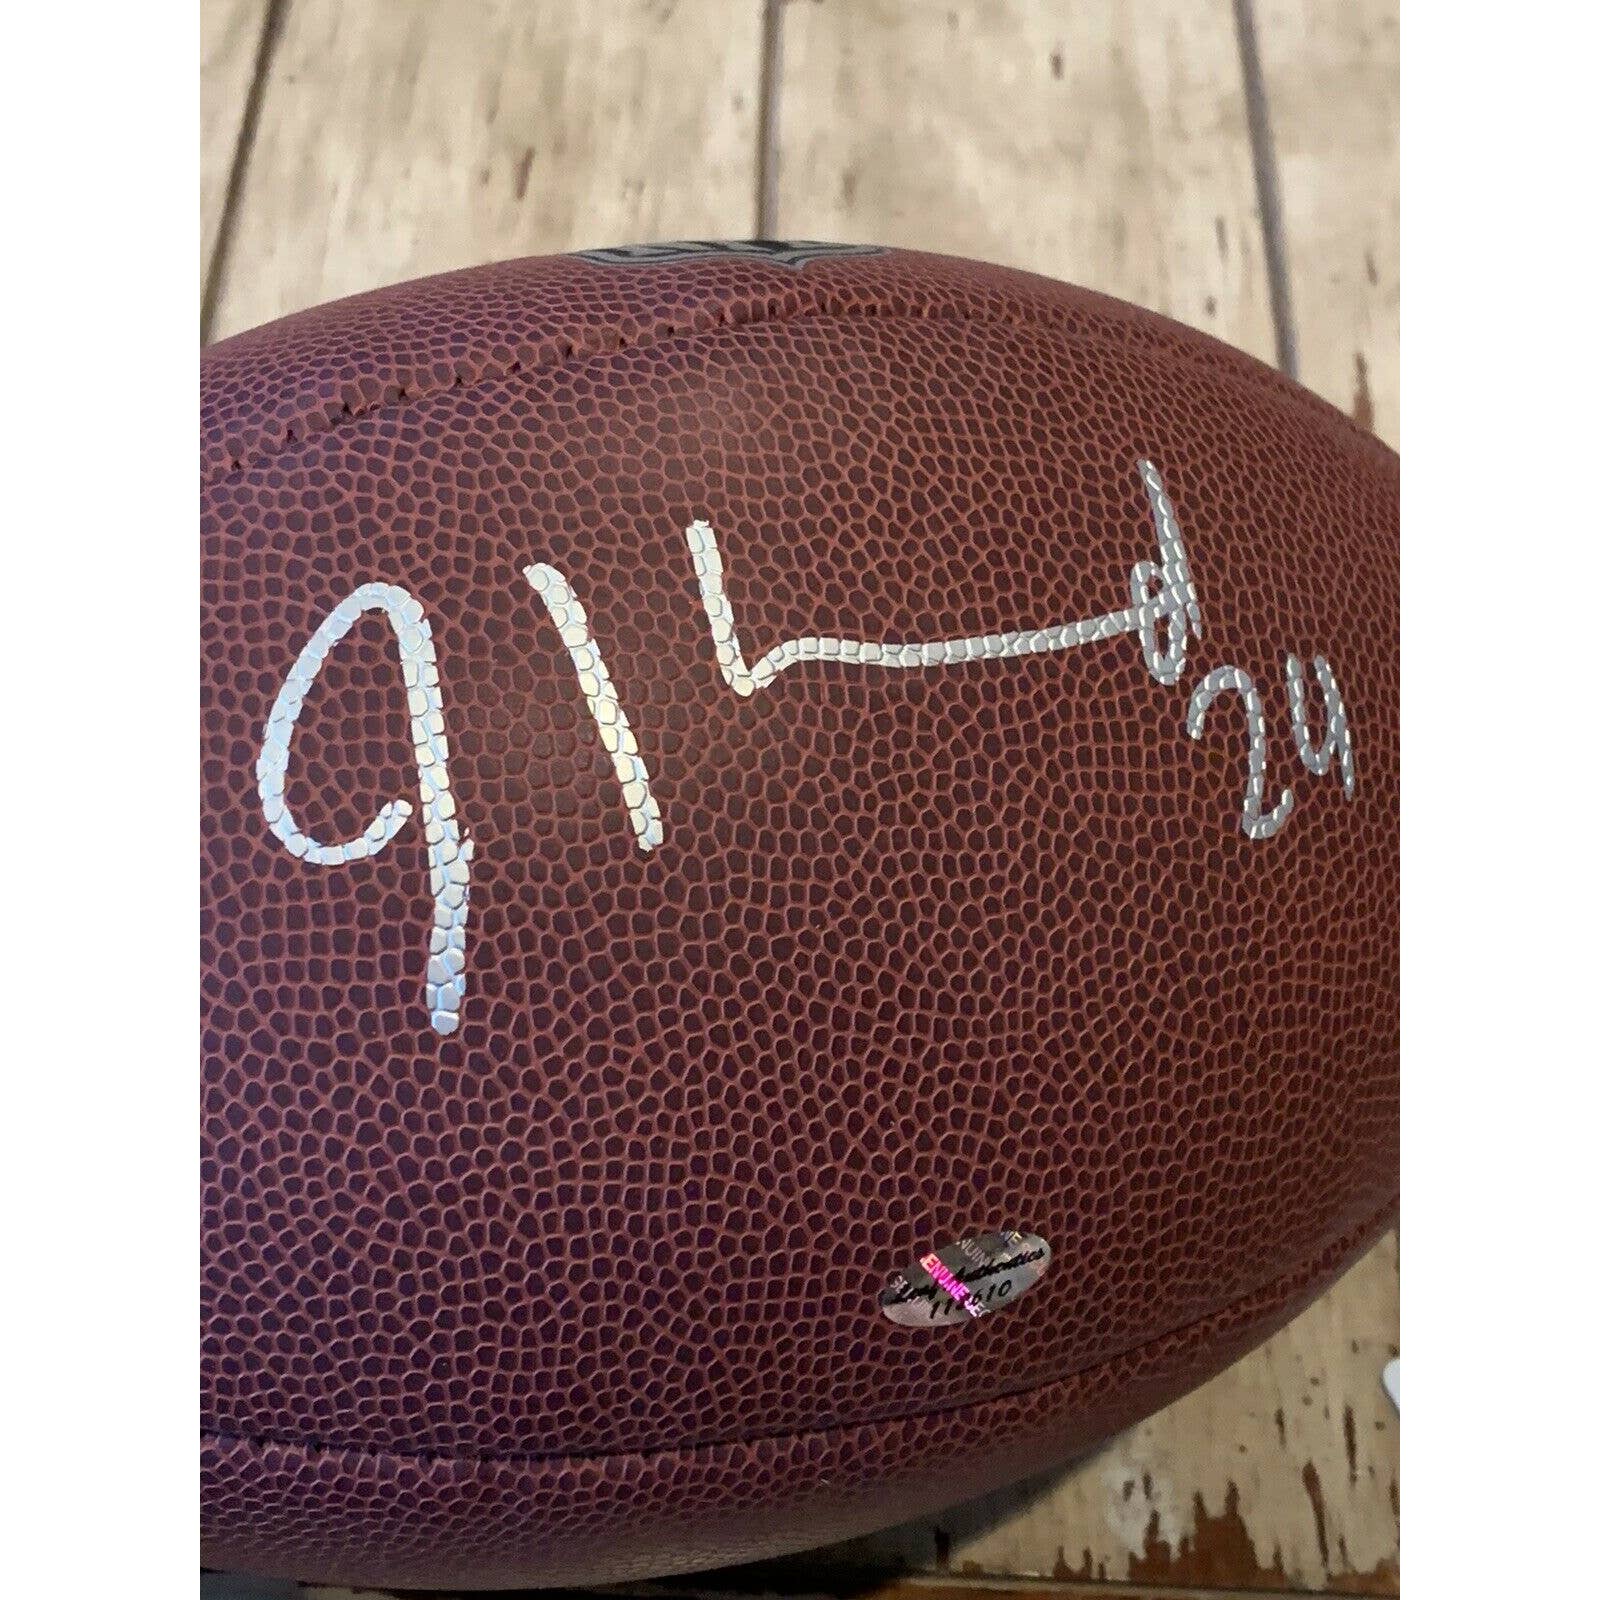 Jordan Howard Autographed/Signed Football LEAF COA Chicago Bears Eagles - TreasuresEvolved